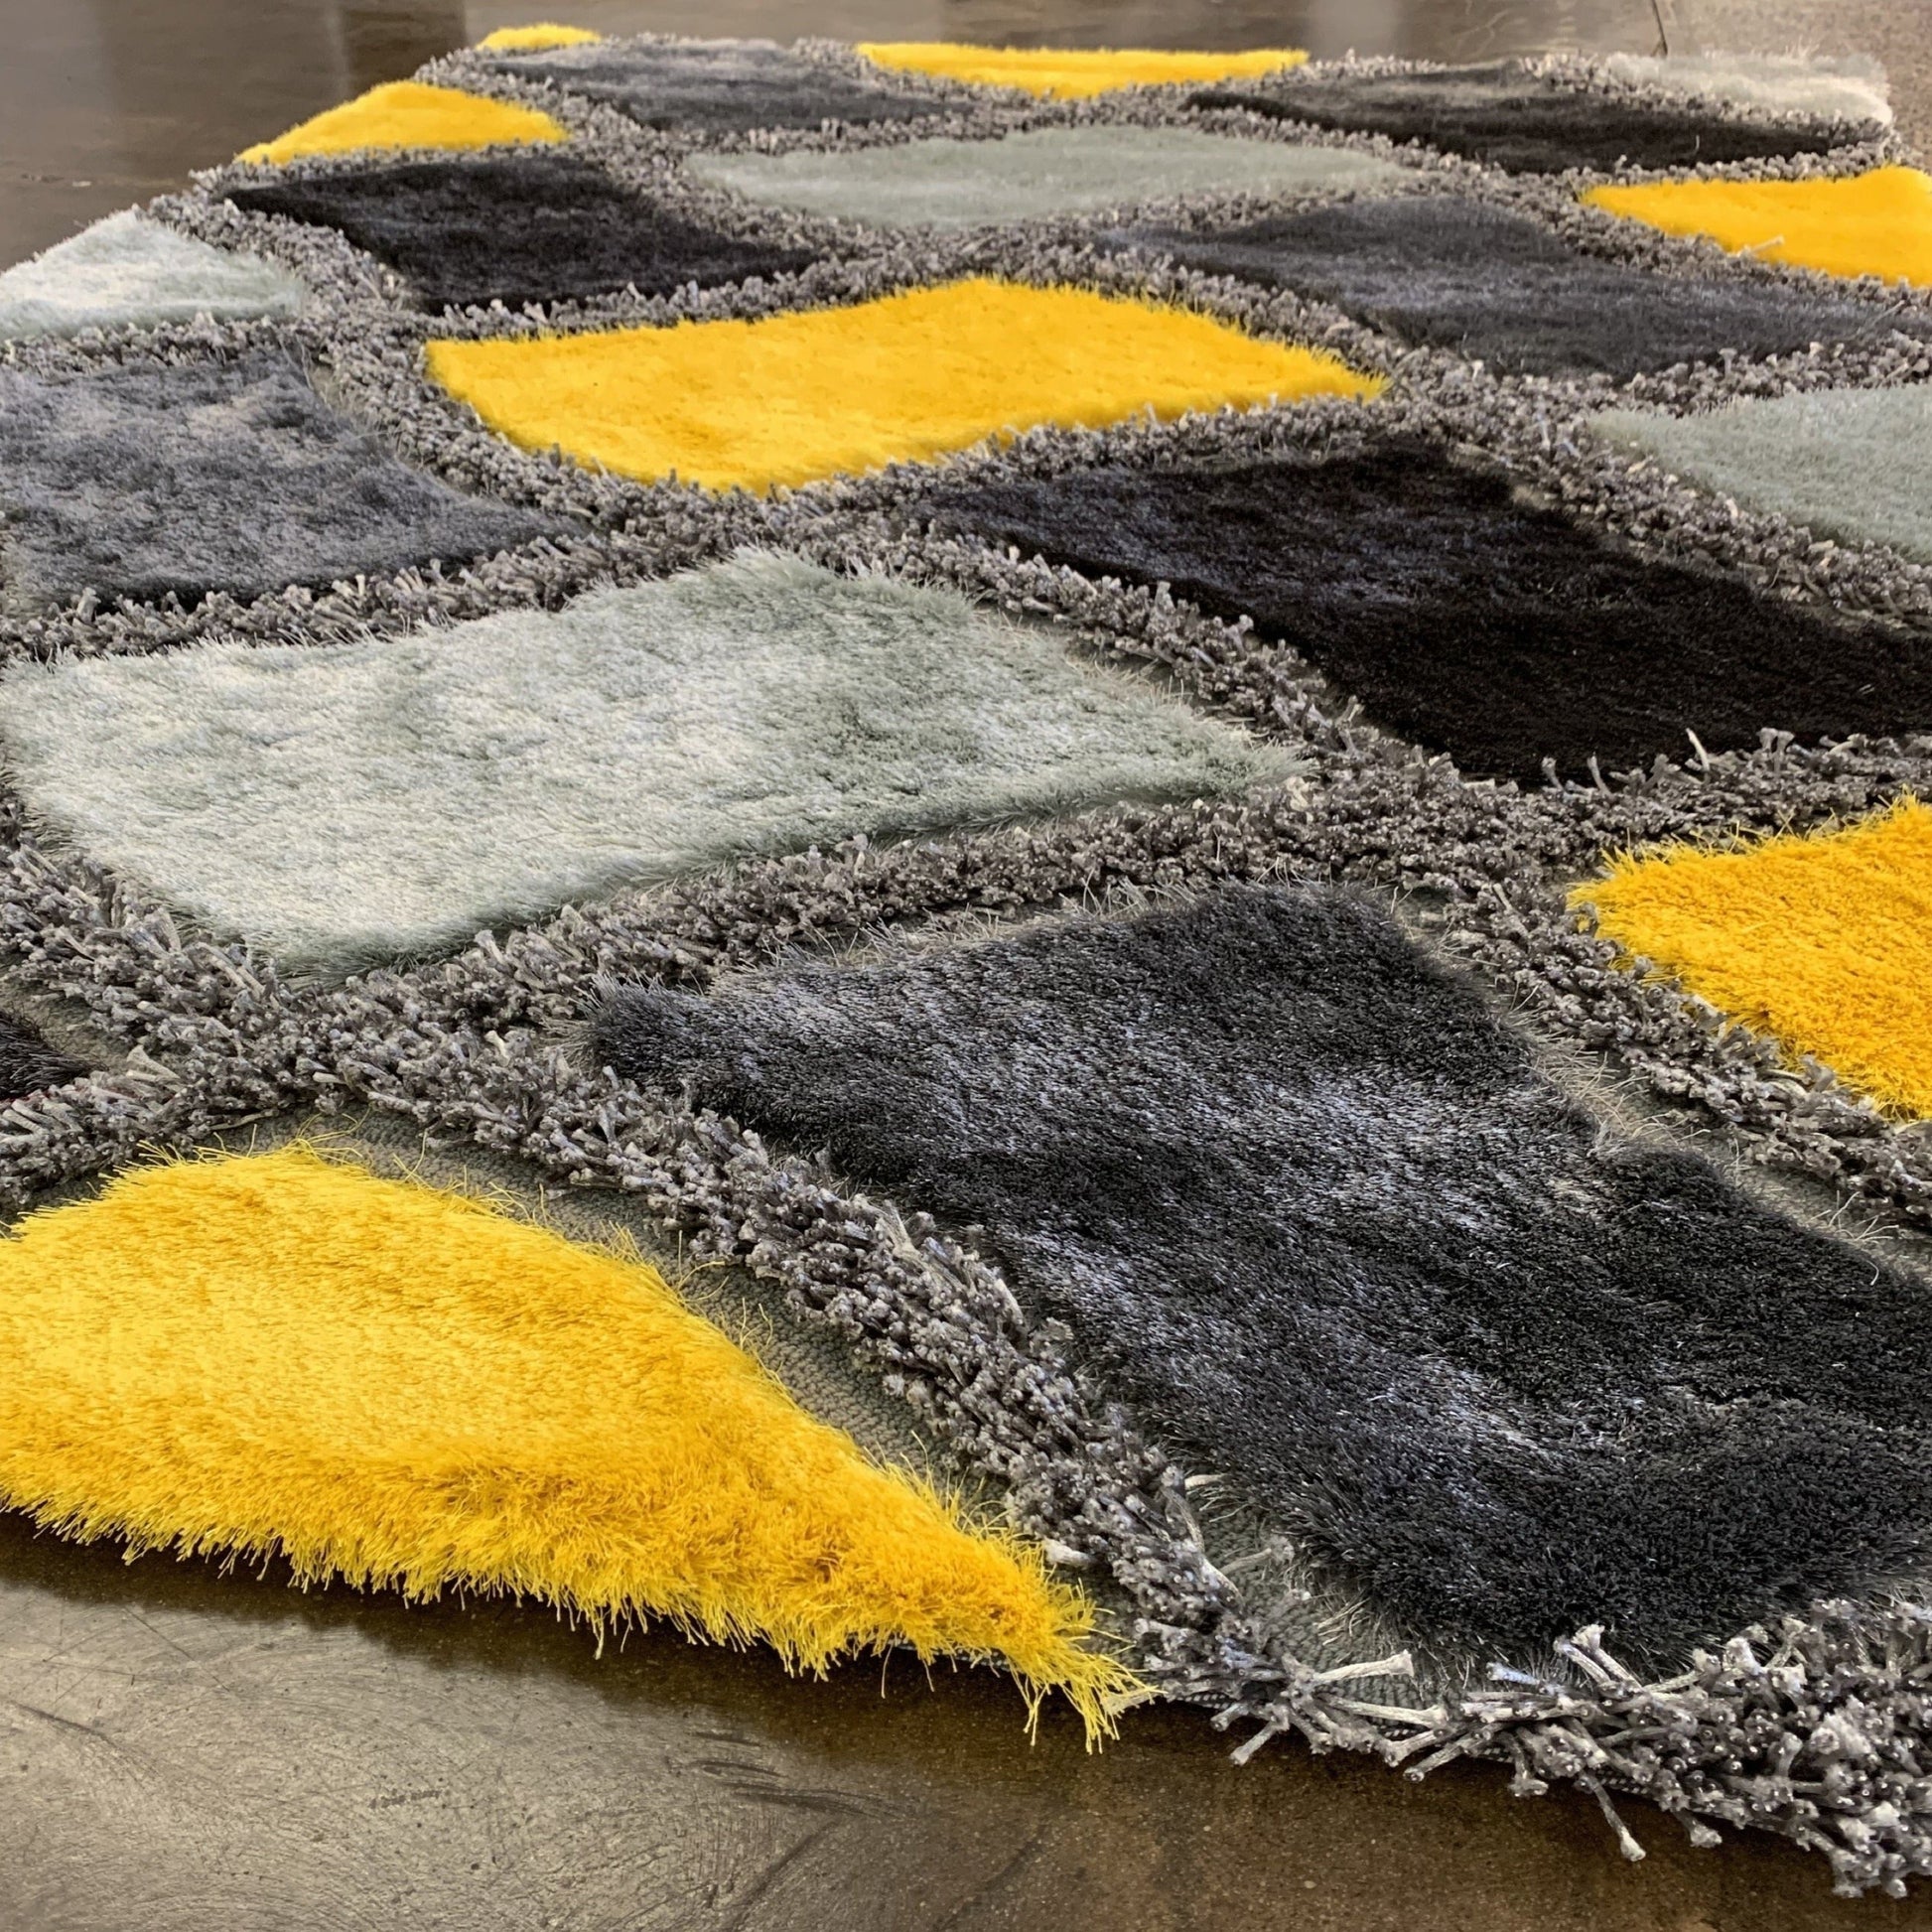 Plush Fluffy Soft Shinny Multi Textural Yellow Black Gray Shag Area Rug/Carpet